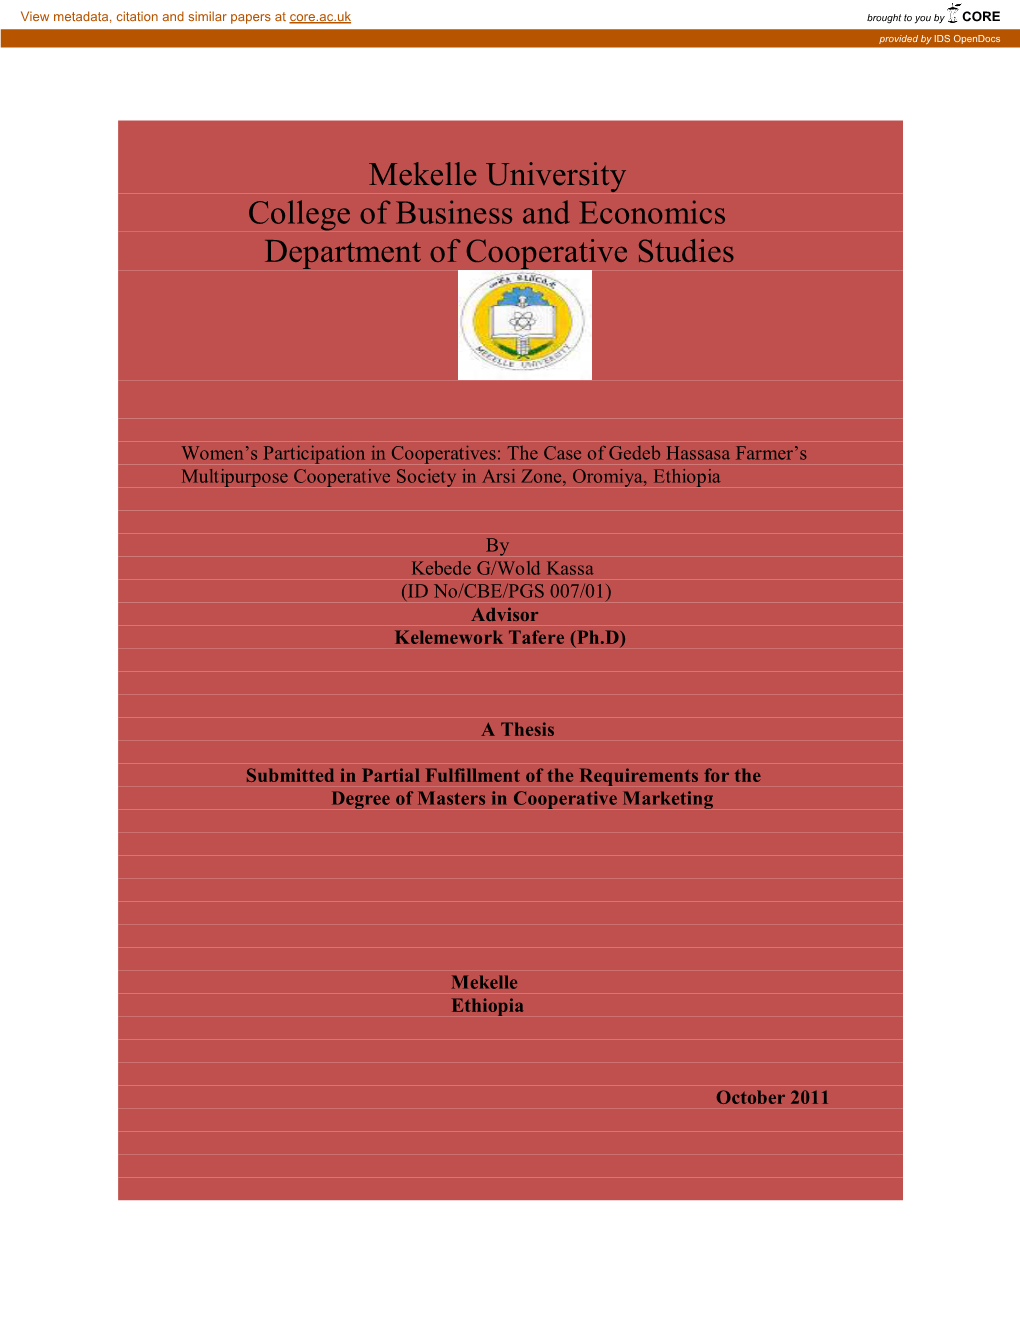 Mekelle University College of Business and Economics Department of Cooperative Studies